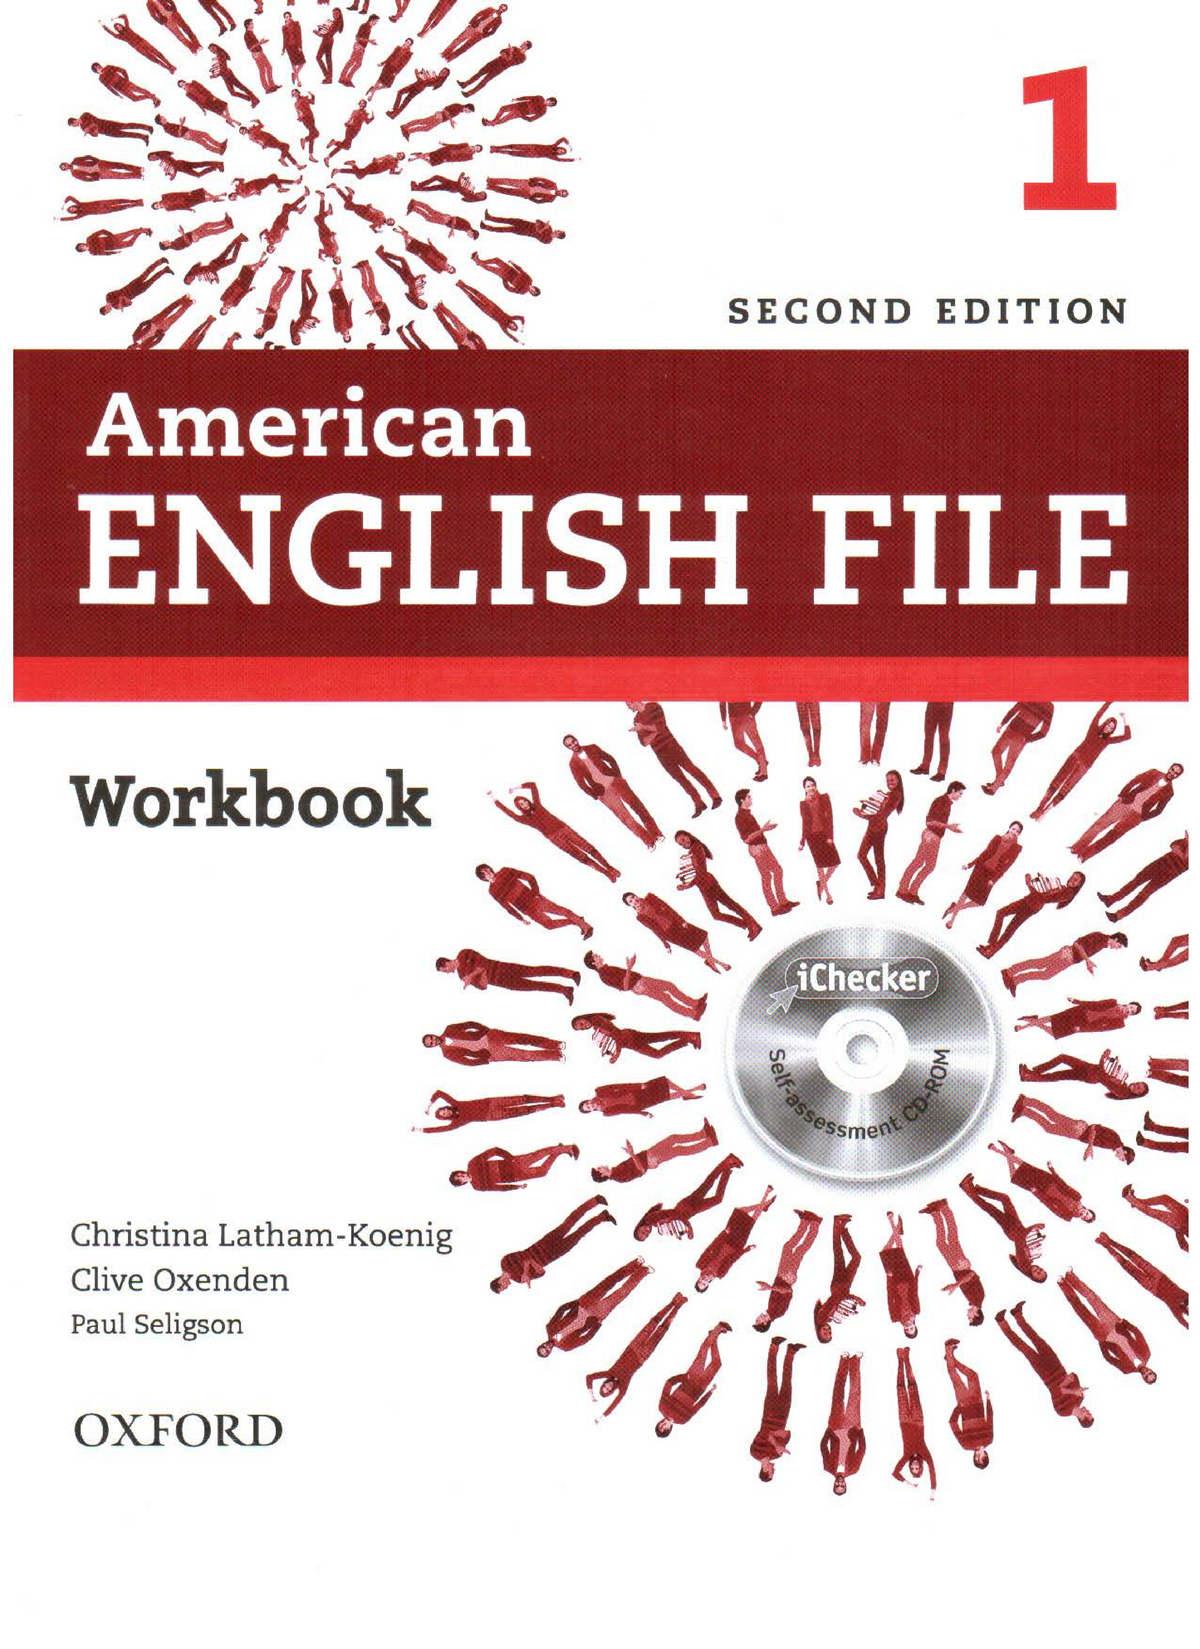 American english file 1 workbook - SECOND EDITION Workbook Paul Seligson OXFORD 4 A My name's - Studocu